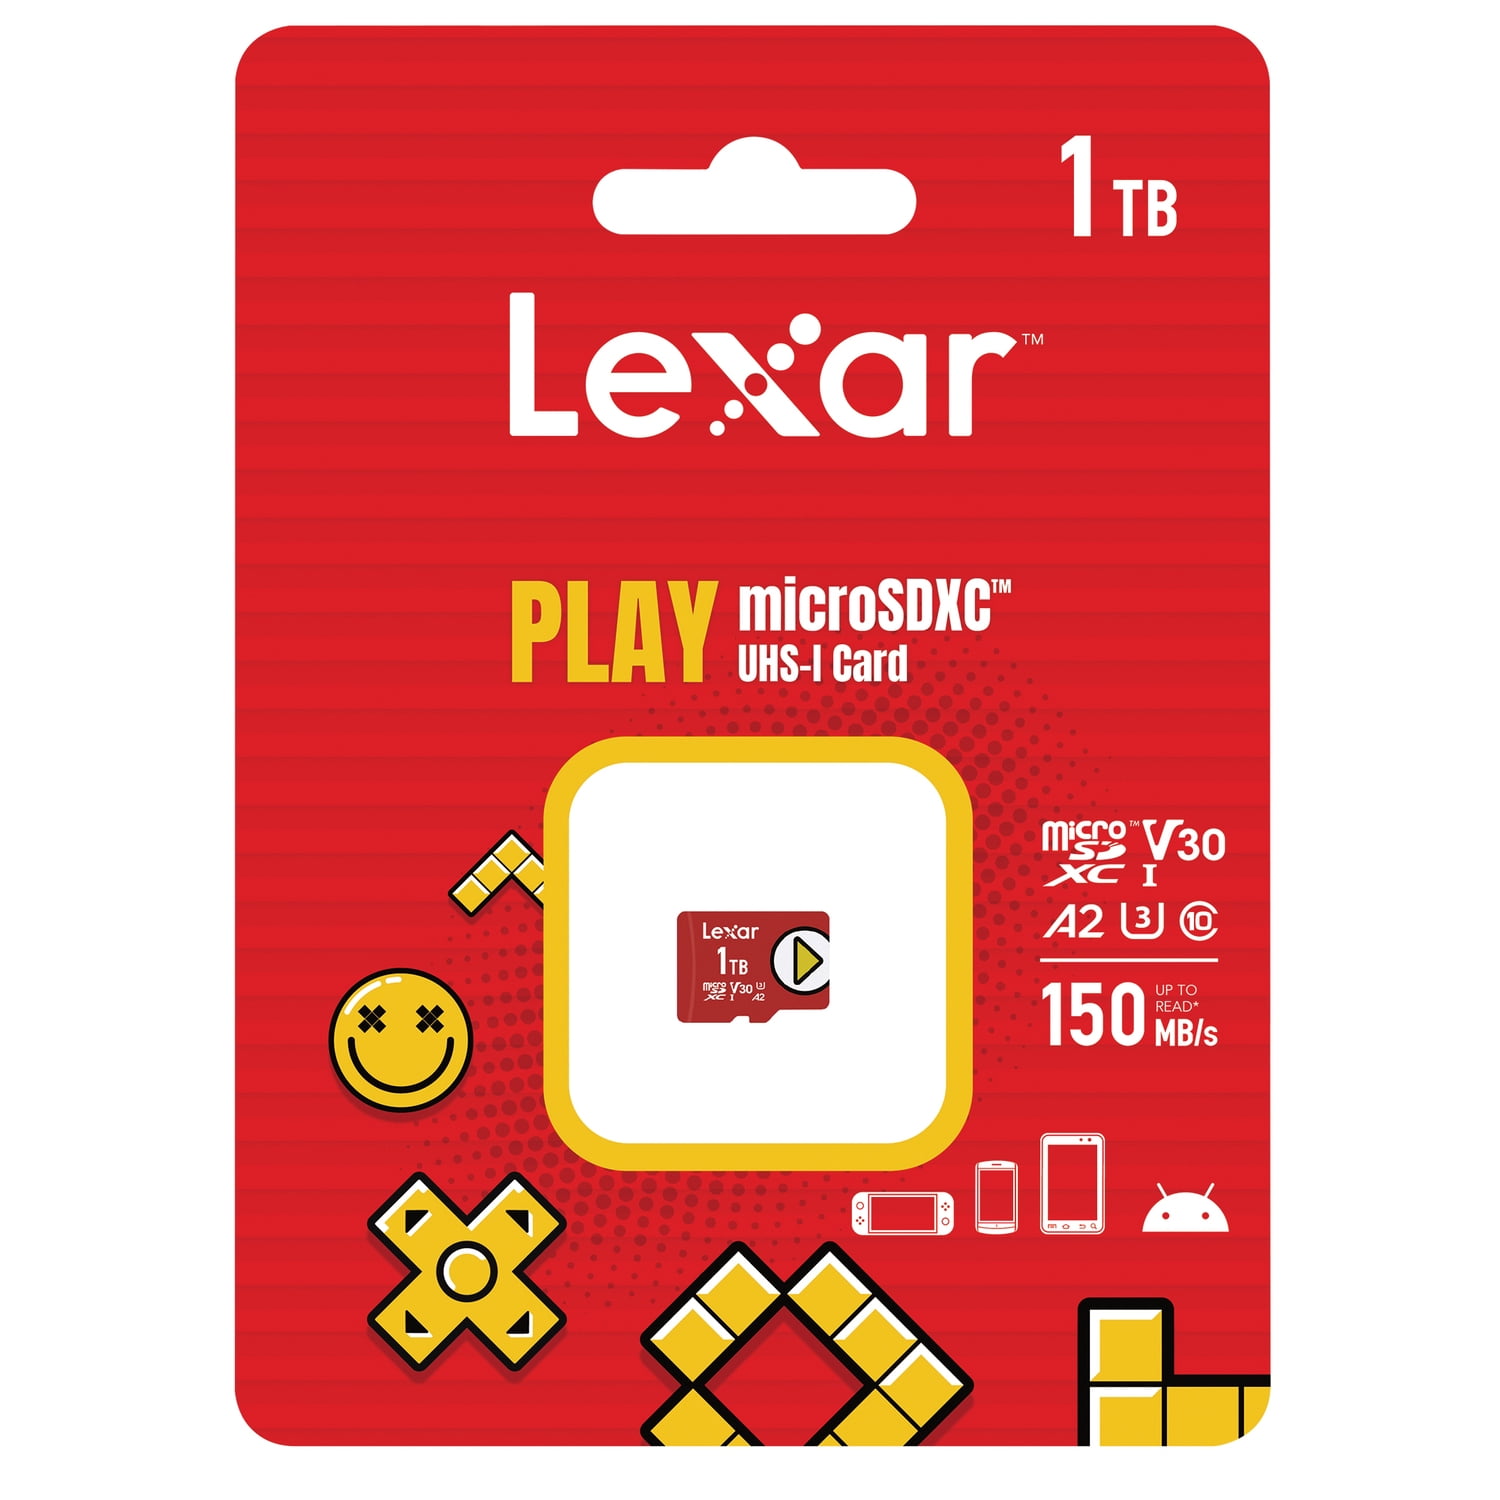 Lexar LMSPLAY001T-BNNNU Play Micro SDHC UHS-I Card (1 TB)